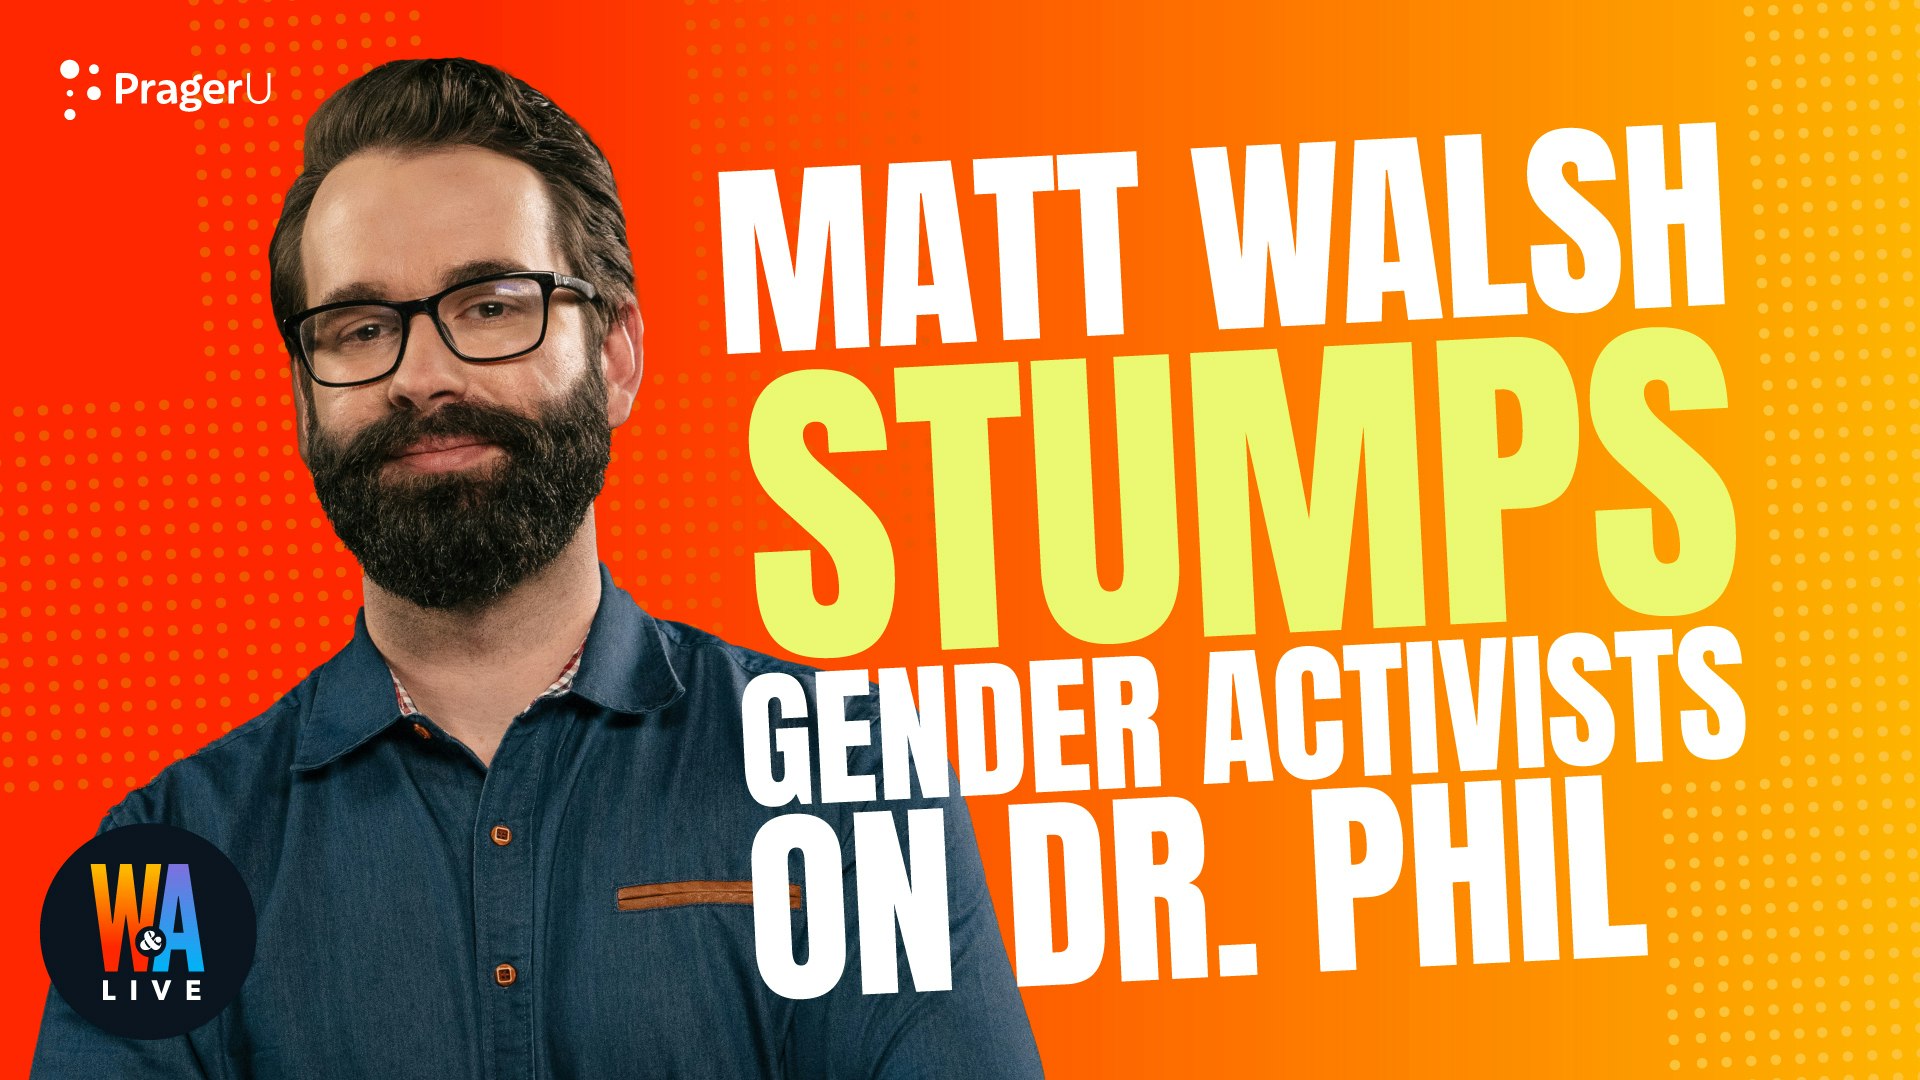 Matt Walsh Stumps Gender Activists on Dr. Phil: 1/20/2022